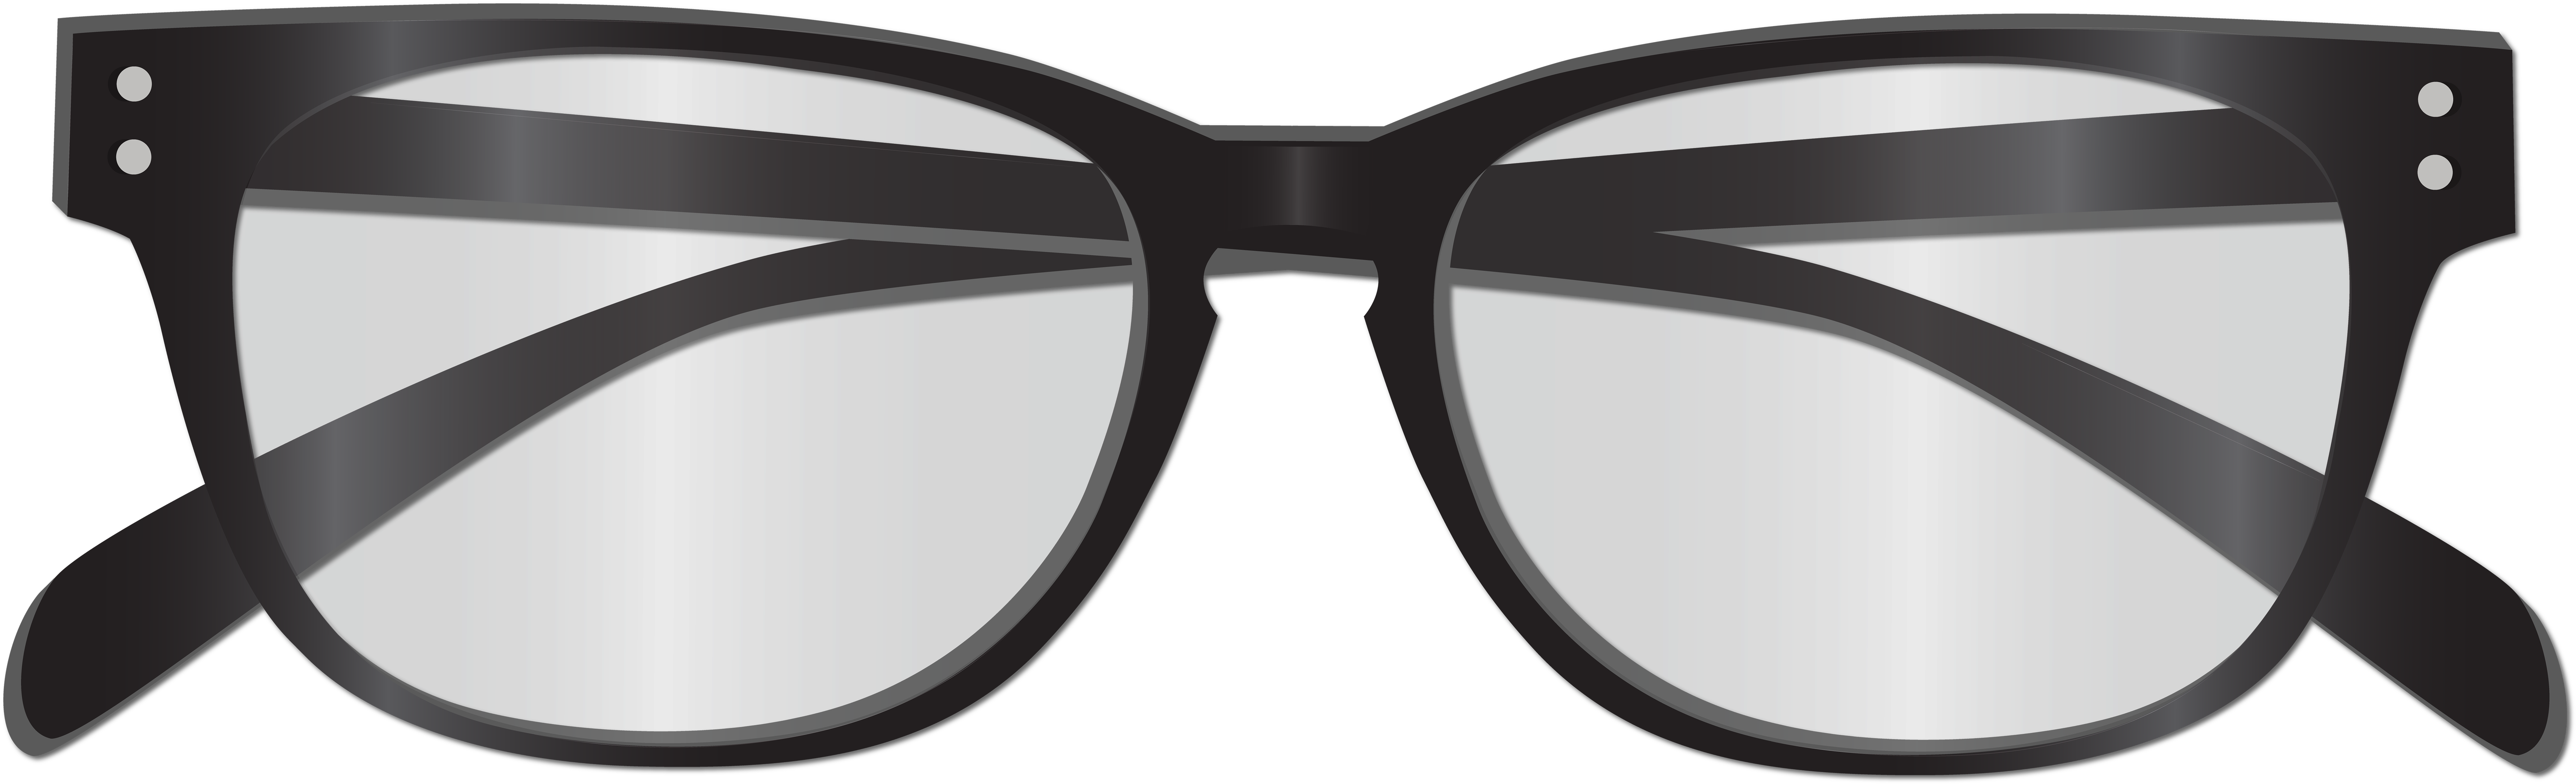 Black Classic Eyeglasses PNG image